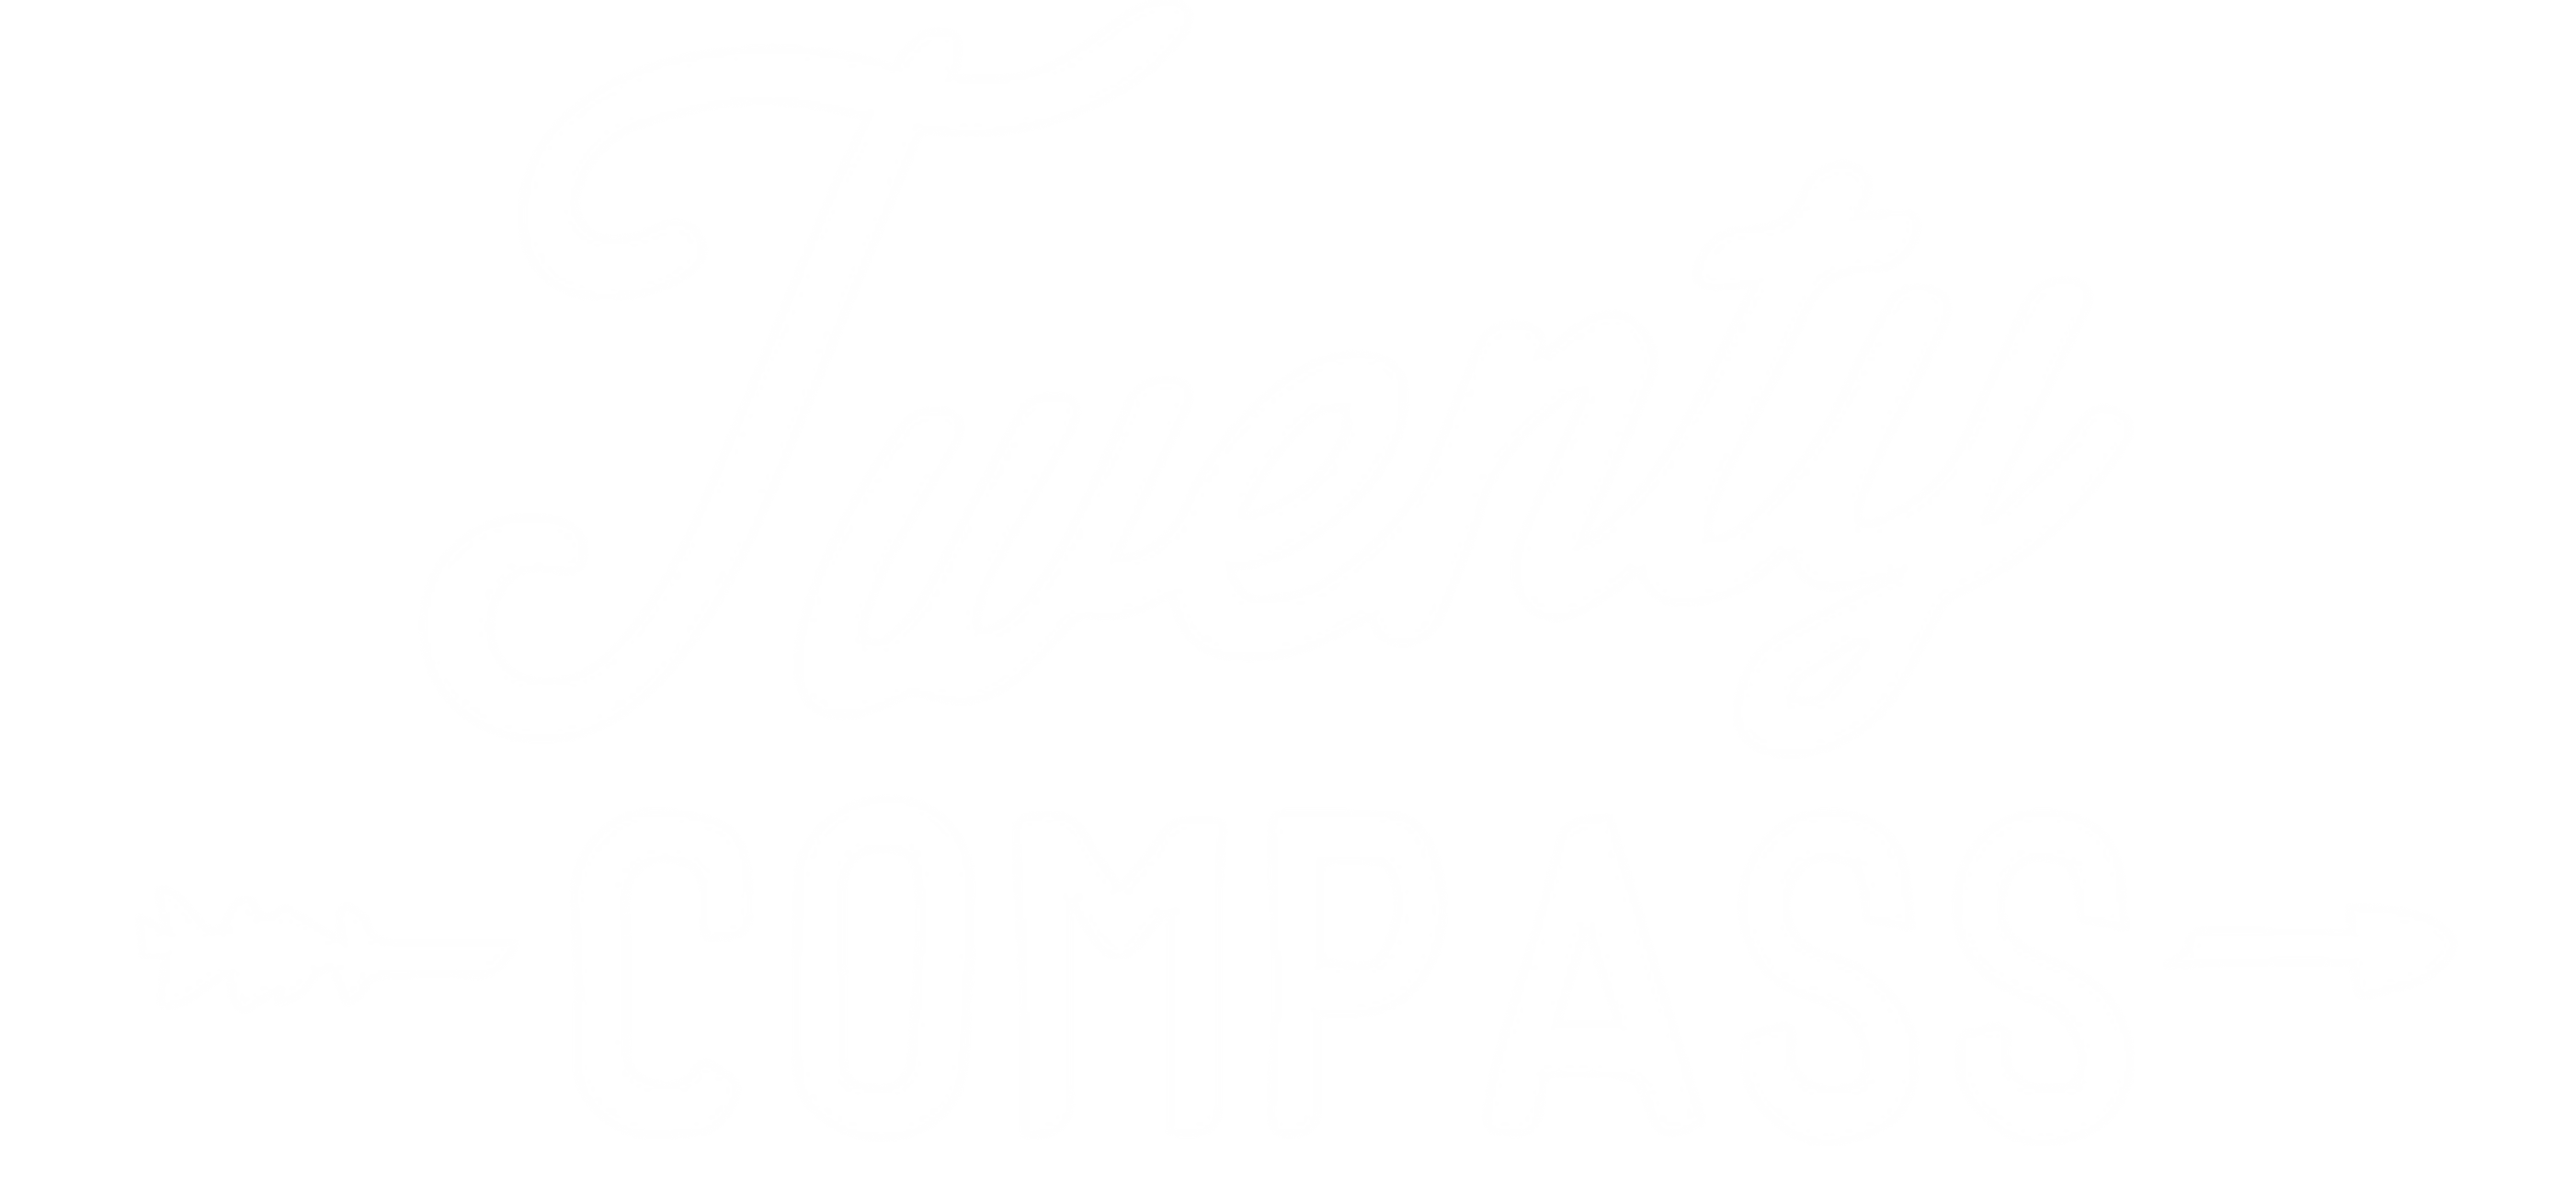 Twenty Compass